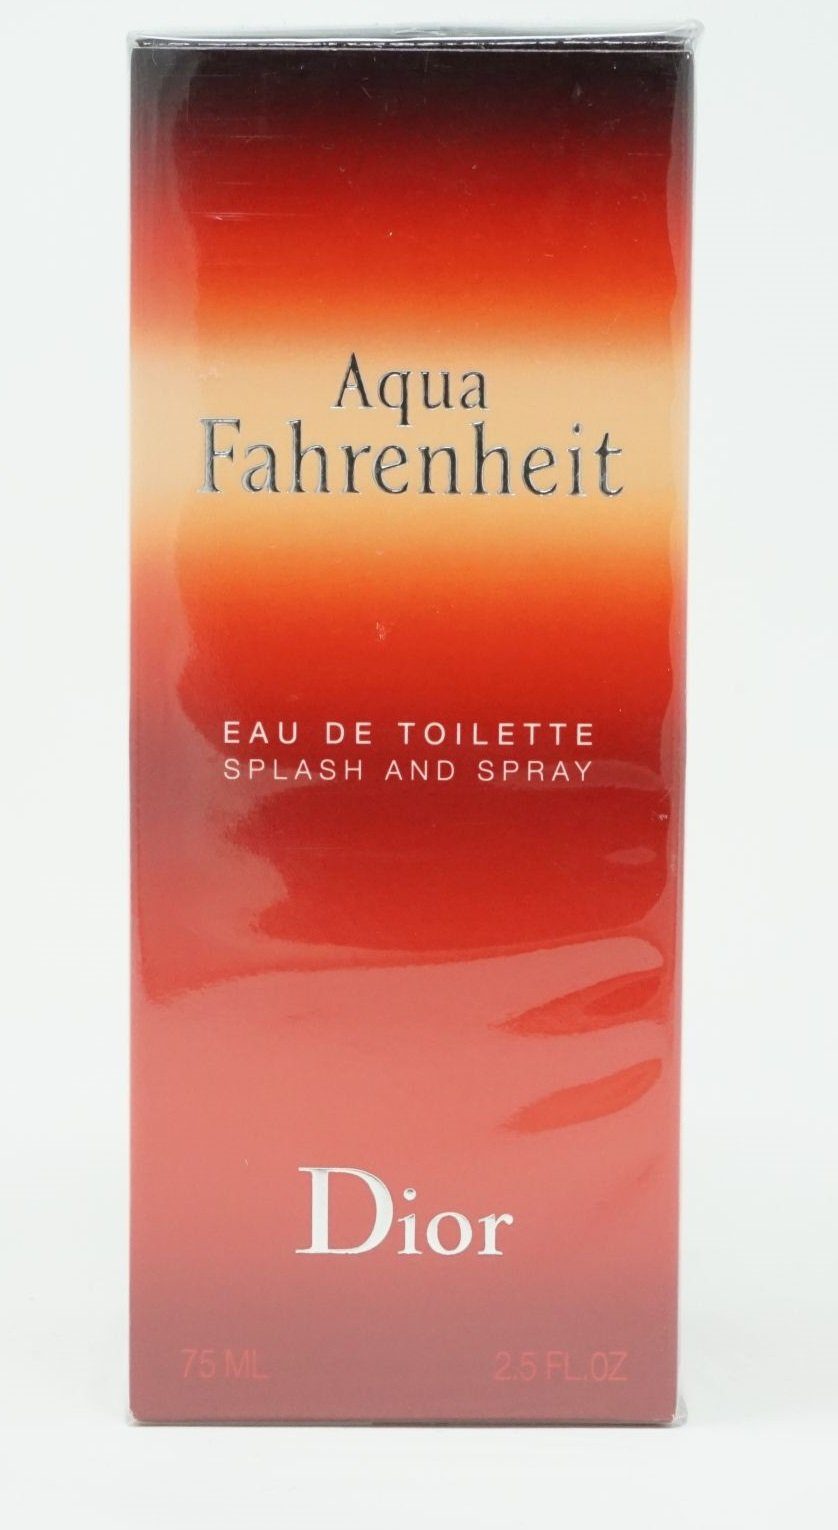 Spray 75ml and Toilette Eau Fahrenheit Dior Splash Eau de Dior de Toilette Aqua